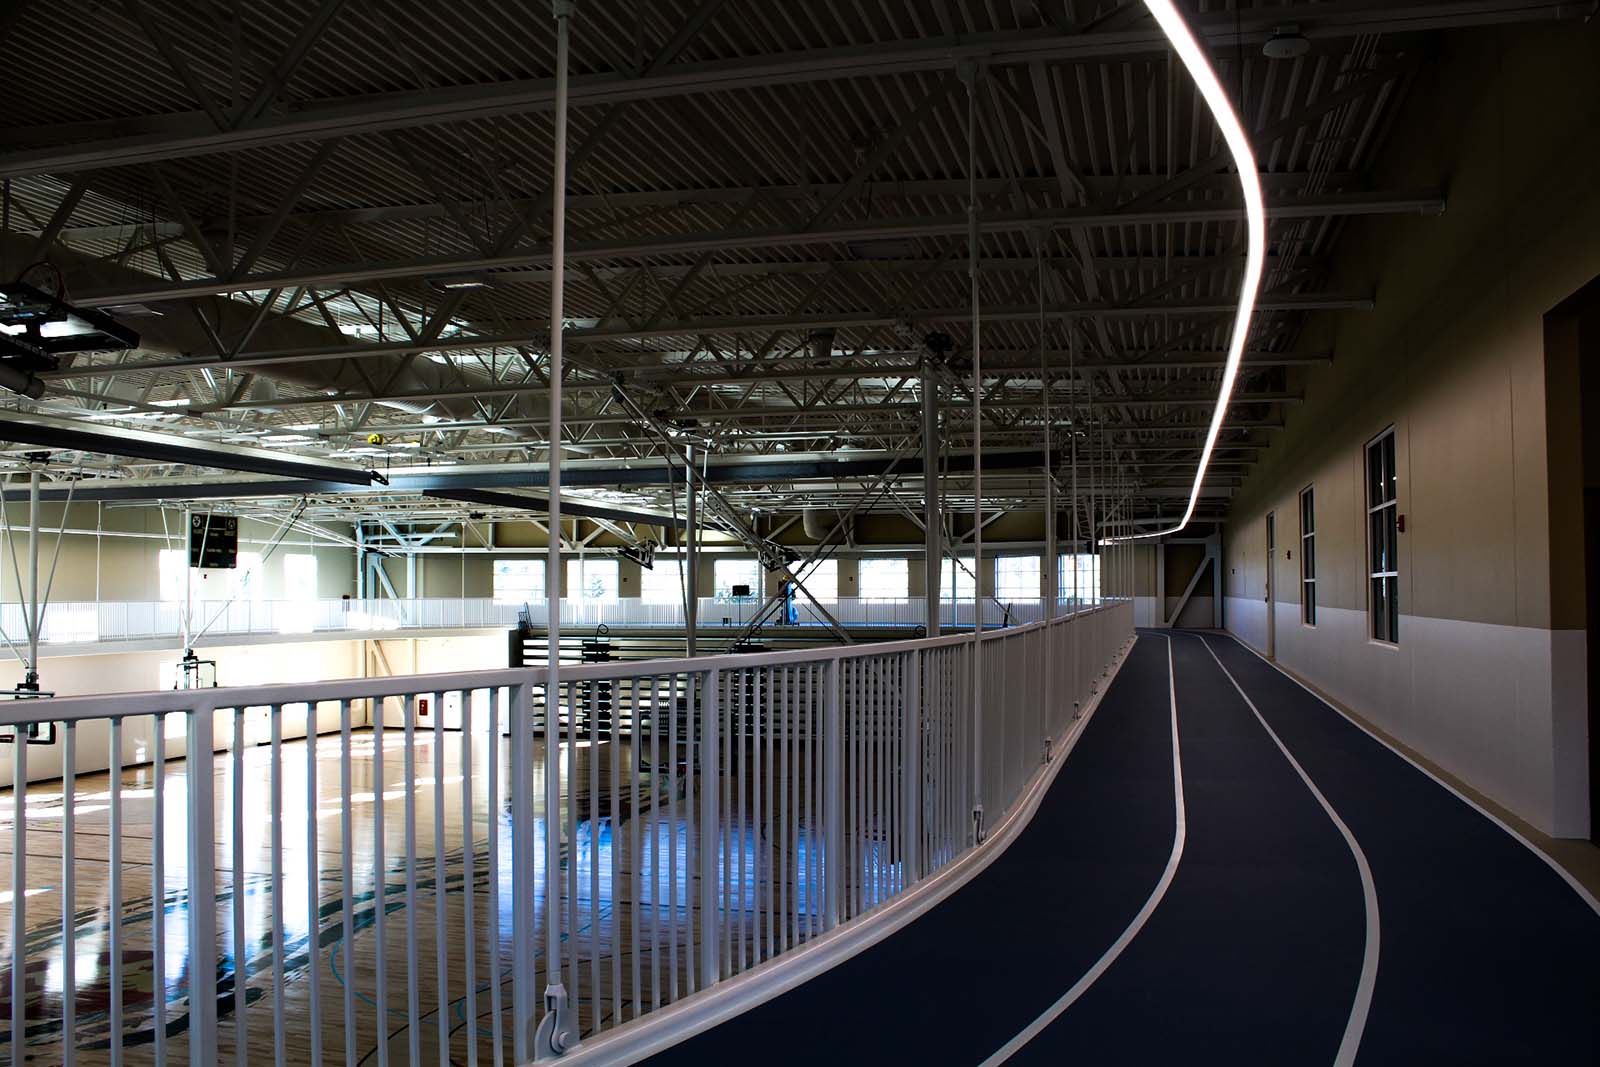 Indoor walking track surrounding two NCAA regulation-size basketball courts